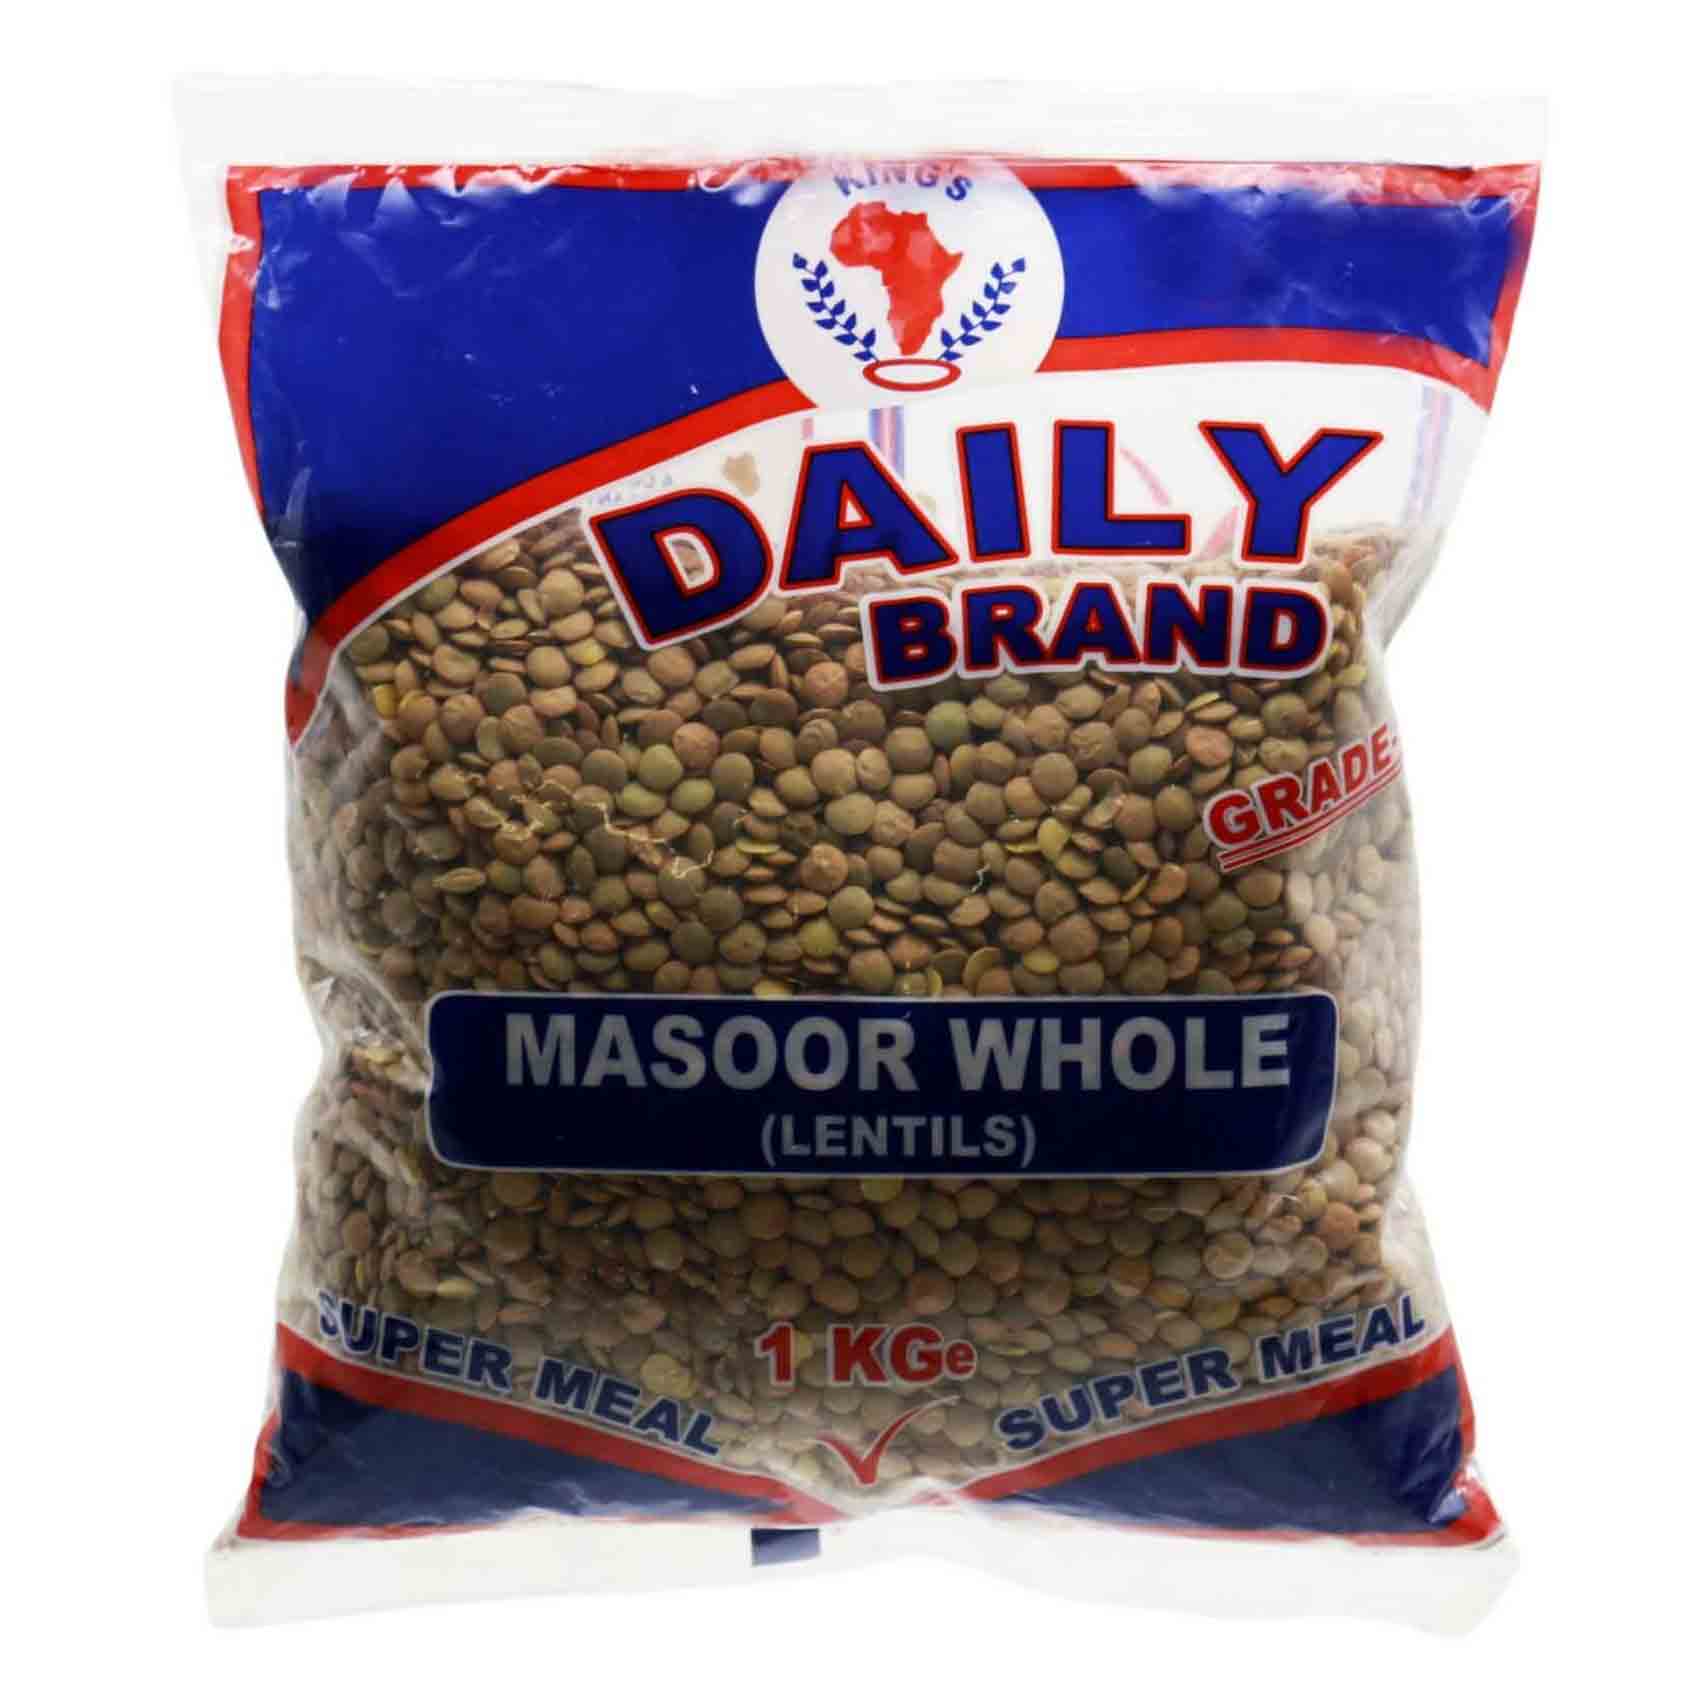 Kings Daily Brand Grade 1 Lentils Mosoor Whole 1kg